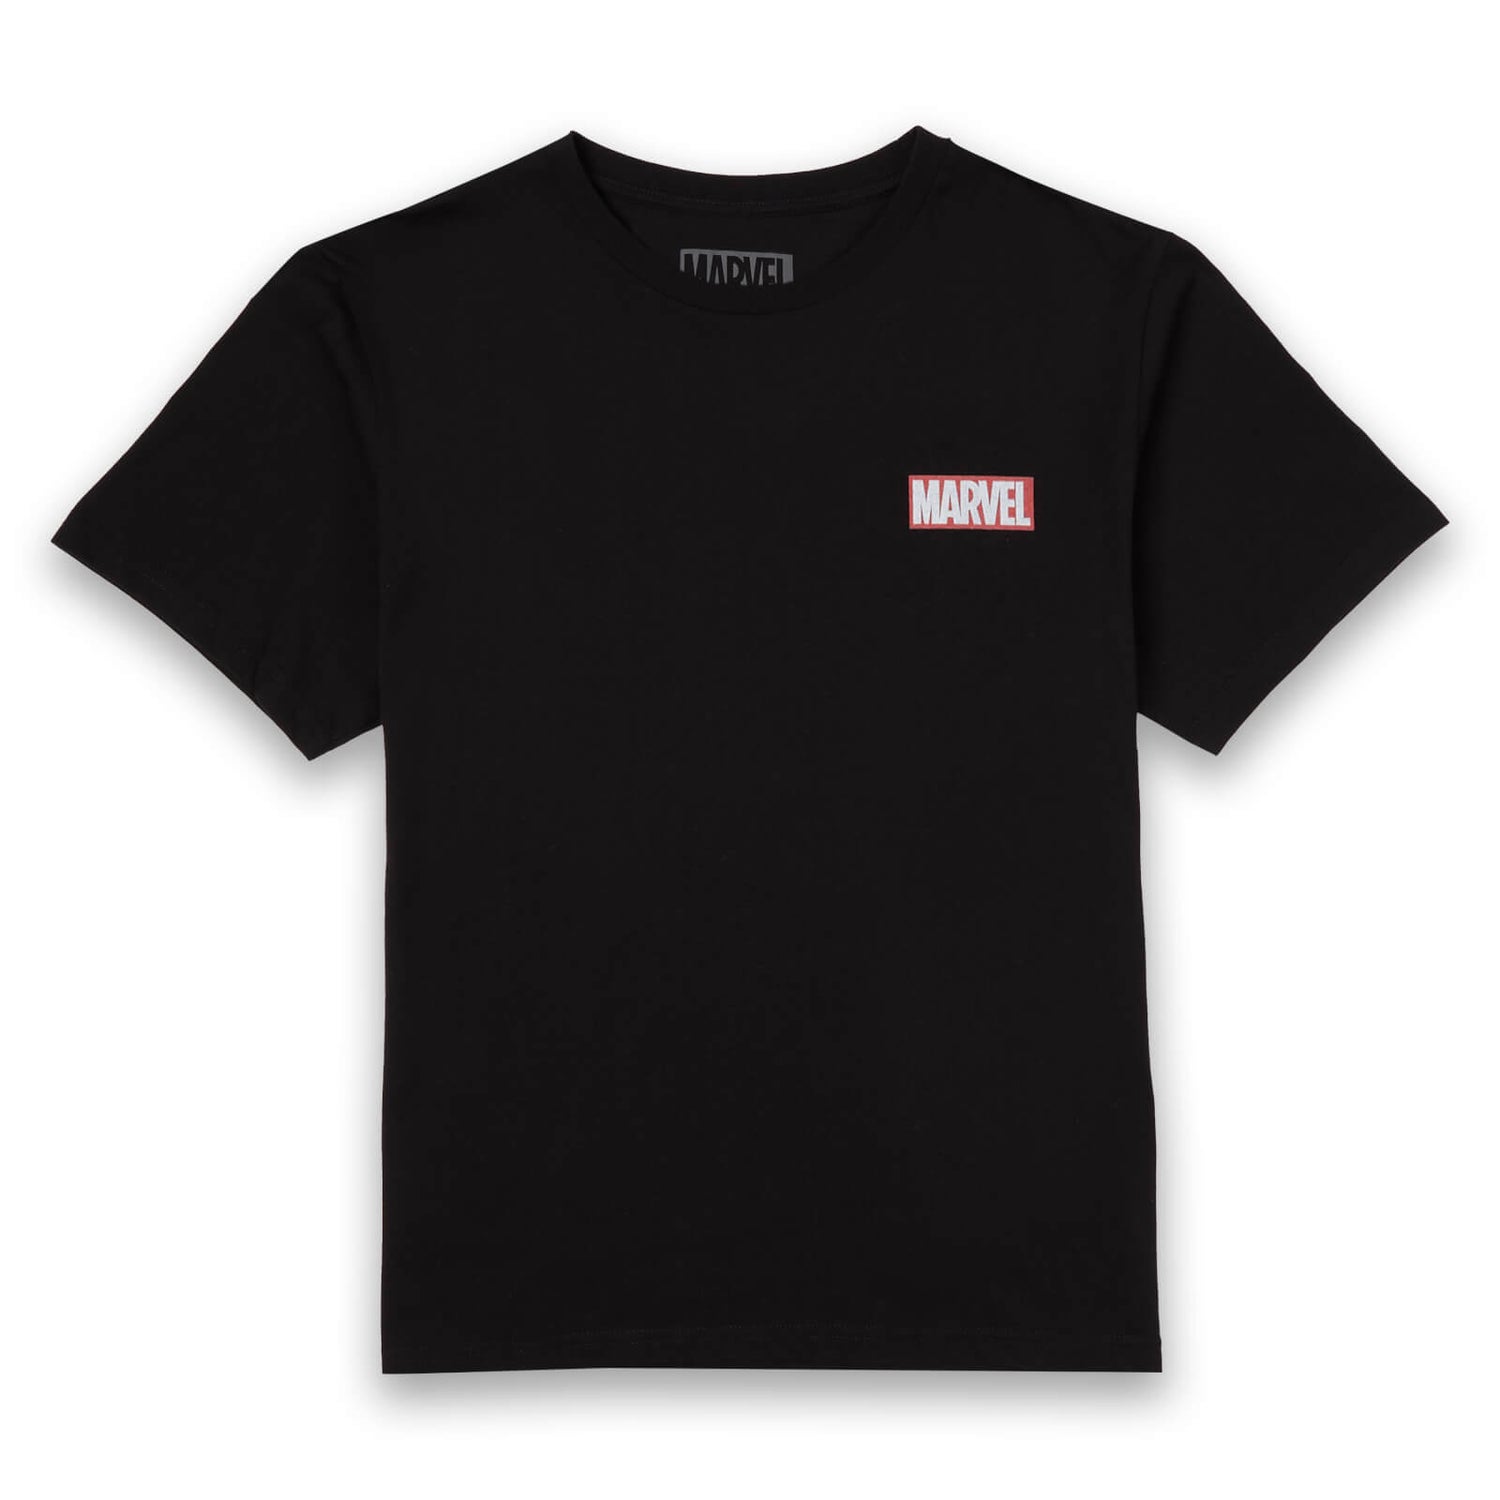 Marvel 10 Year Anniversary Line Up Men's T-Shirt - Black - XS